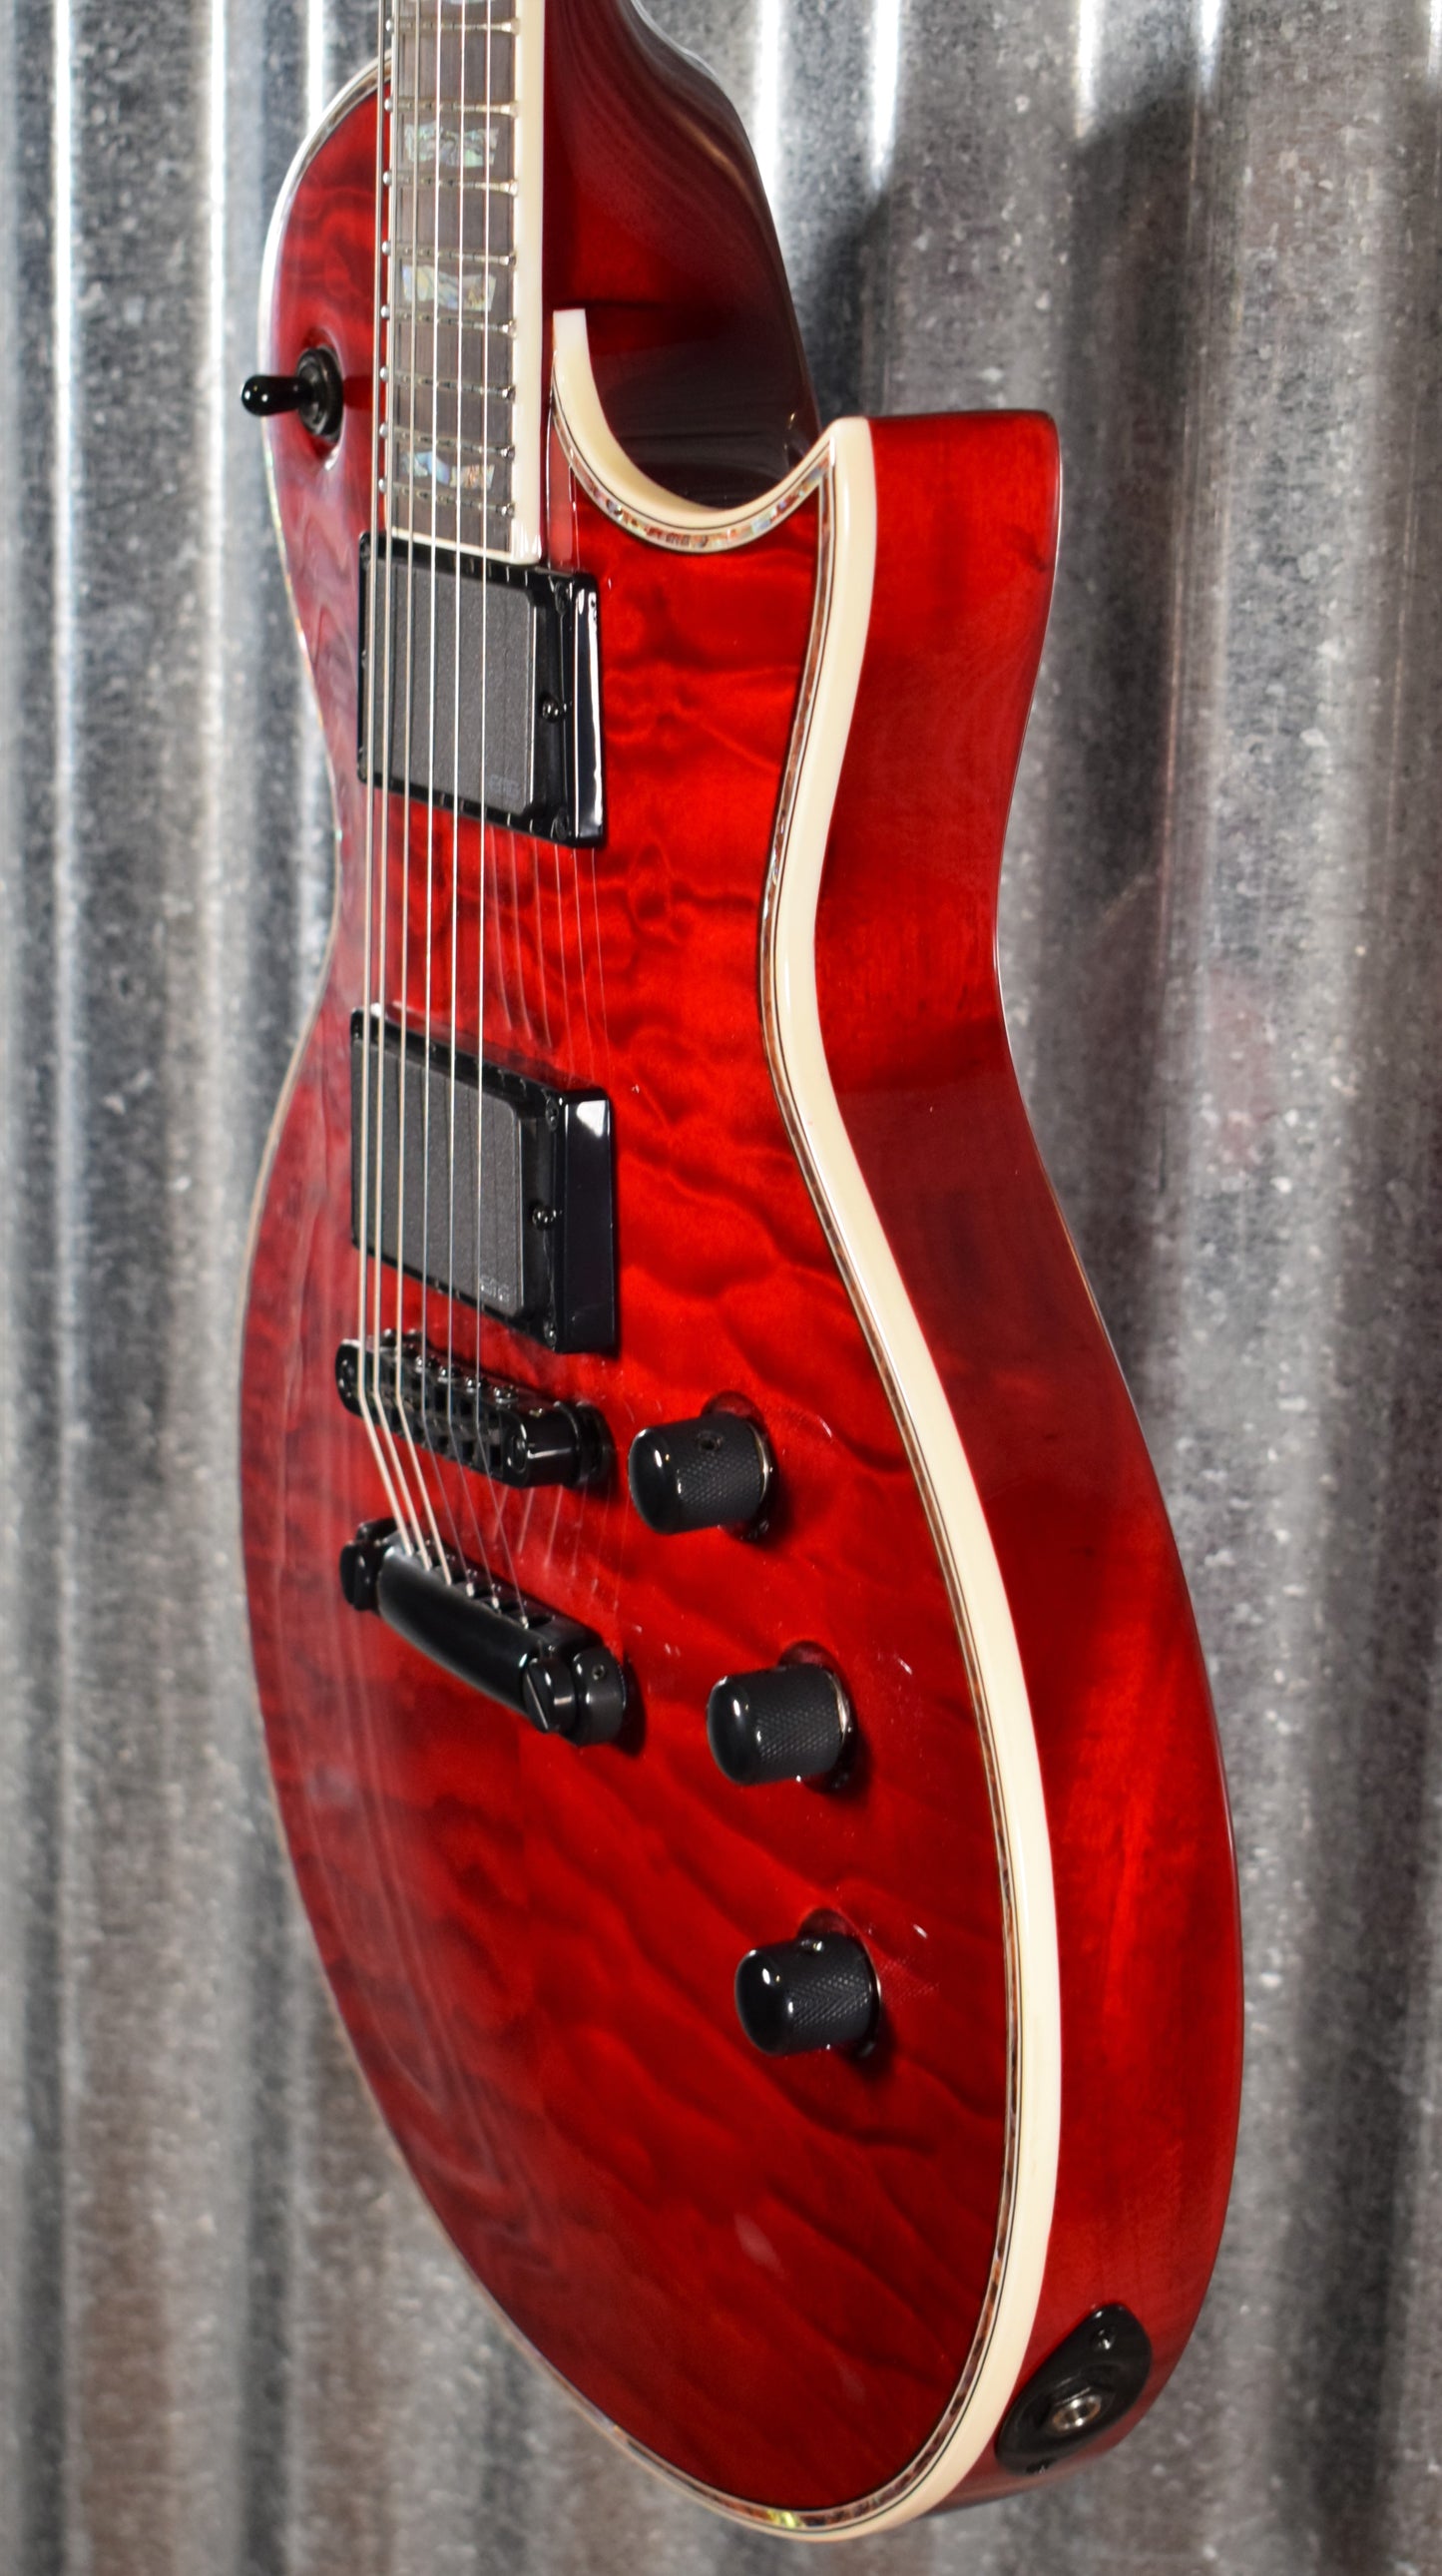 ESP LTD EC-1000 Quilt Top See Through Black Cherry EMG Guitar LEC1000STBC #1224 Demo